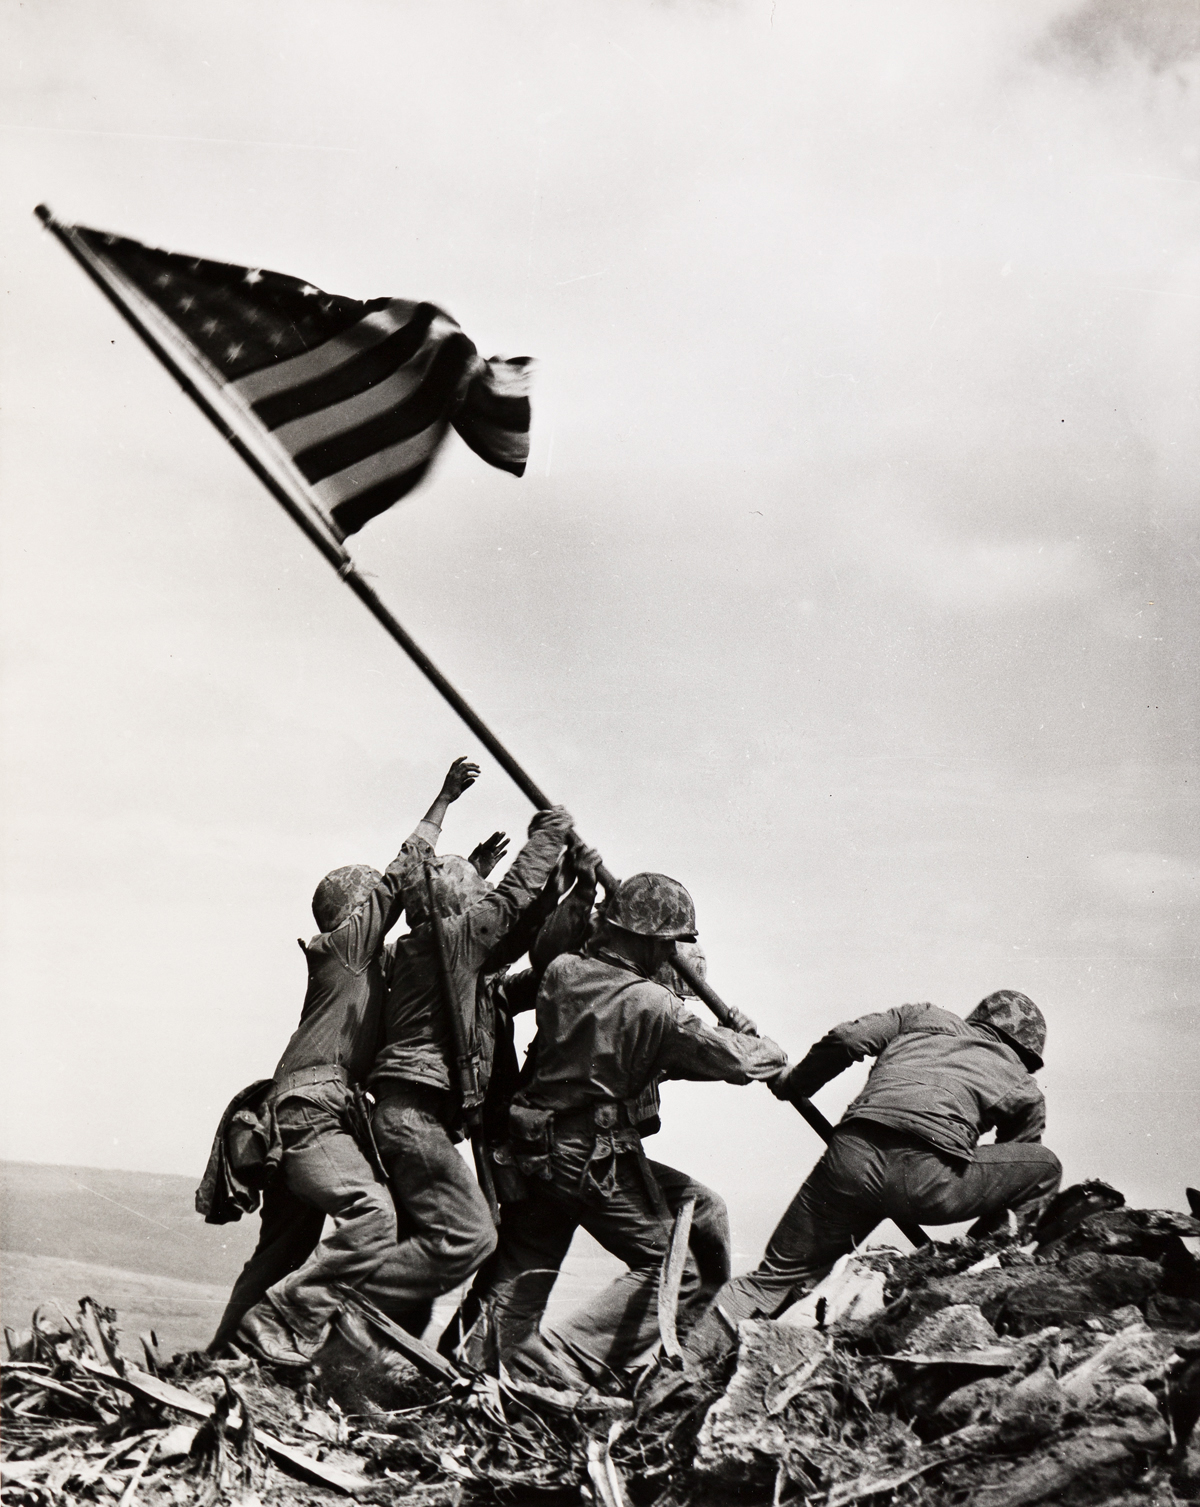 JOE ROSENTHAL (1911-2006) Raising the Flag on Iwo Jima.